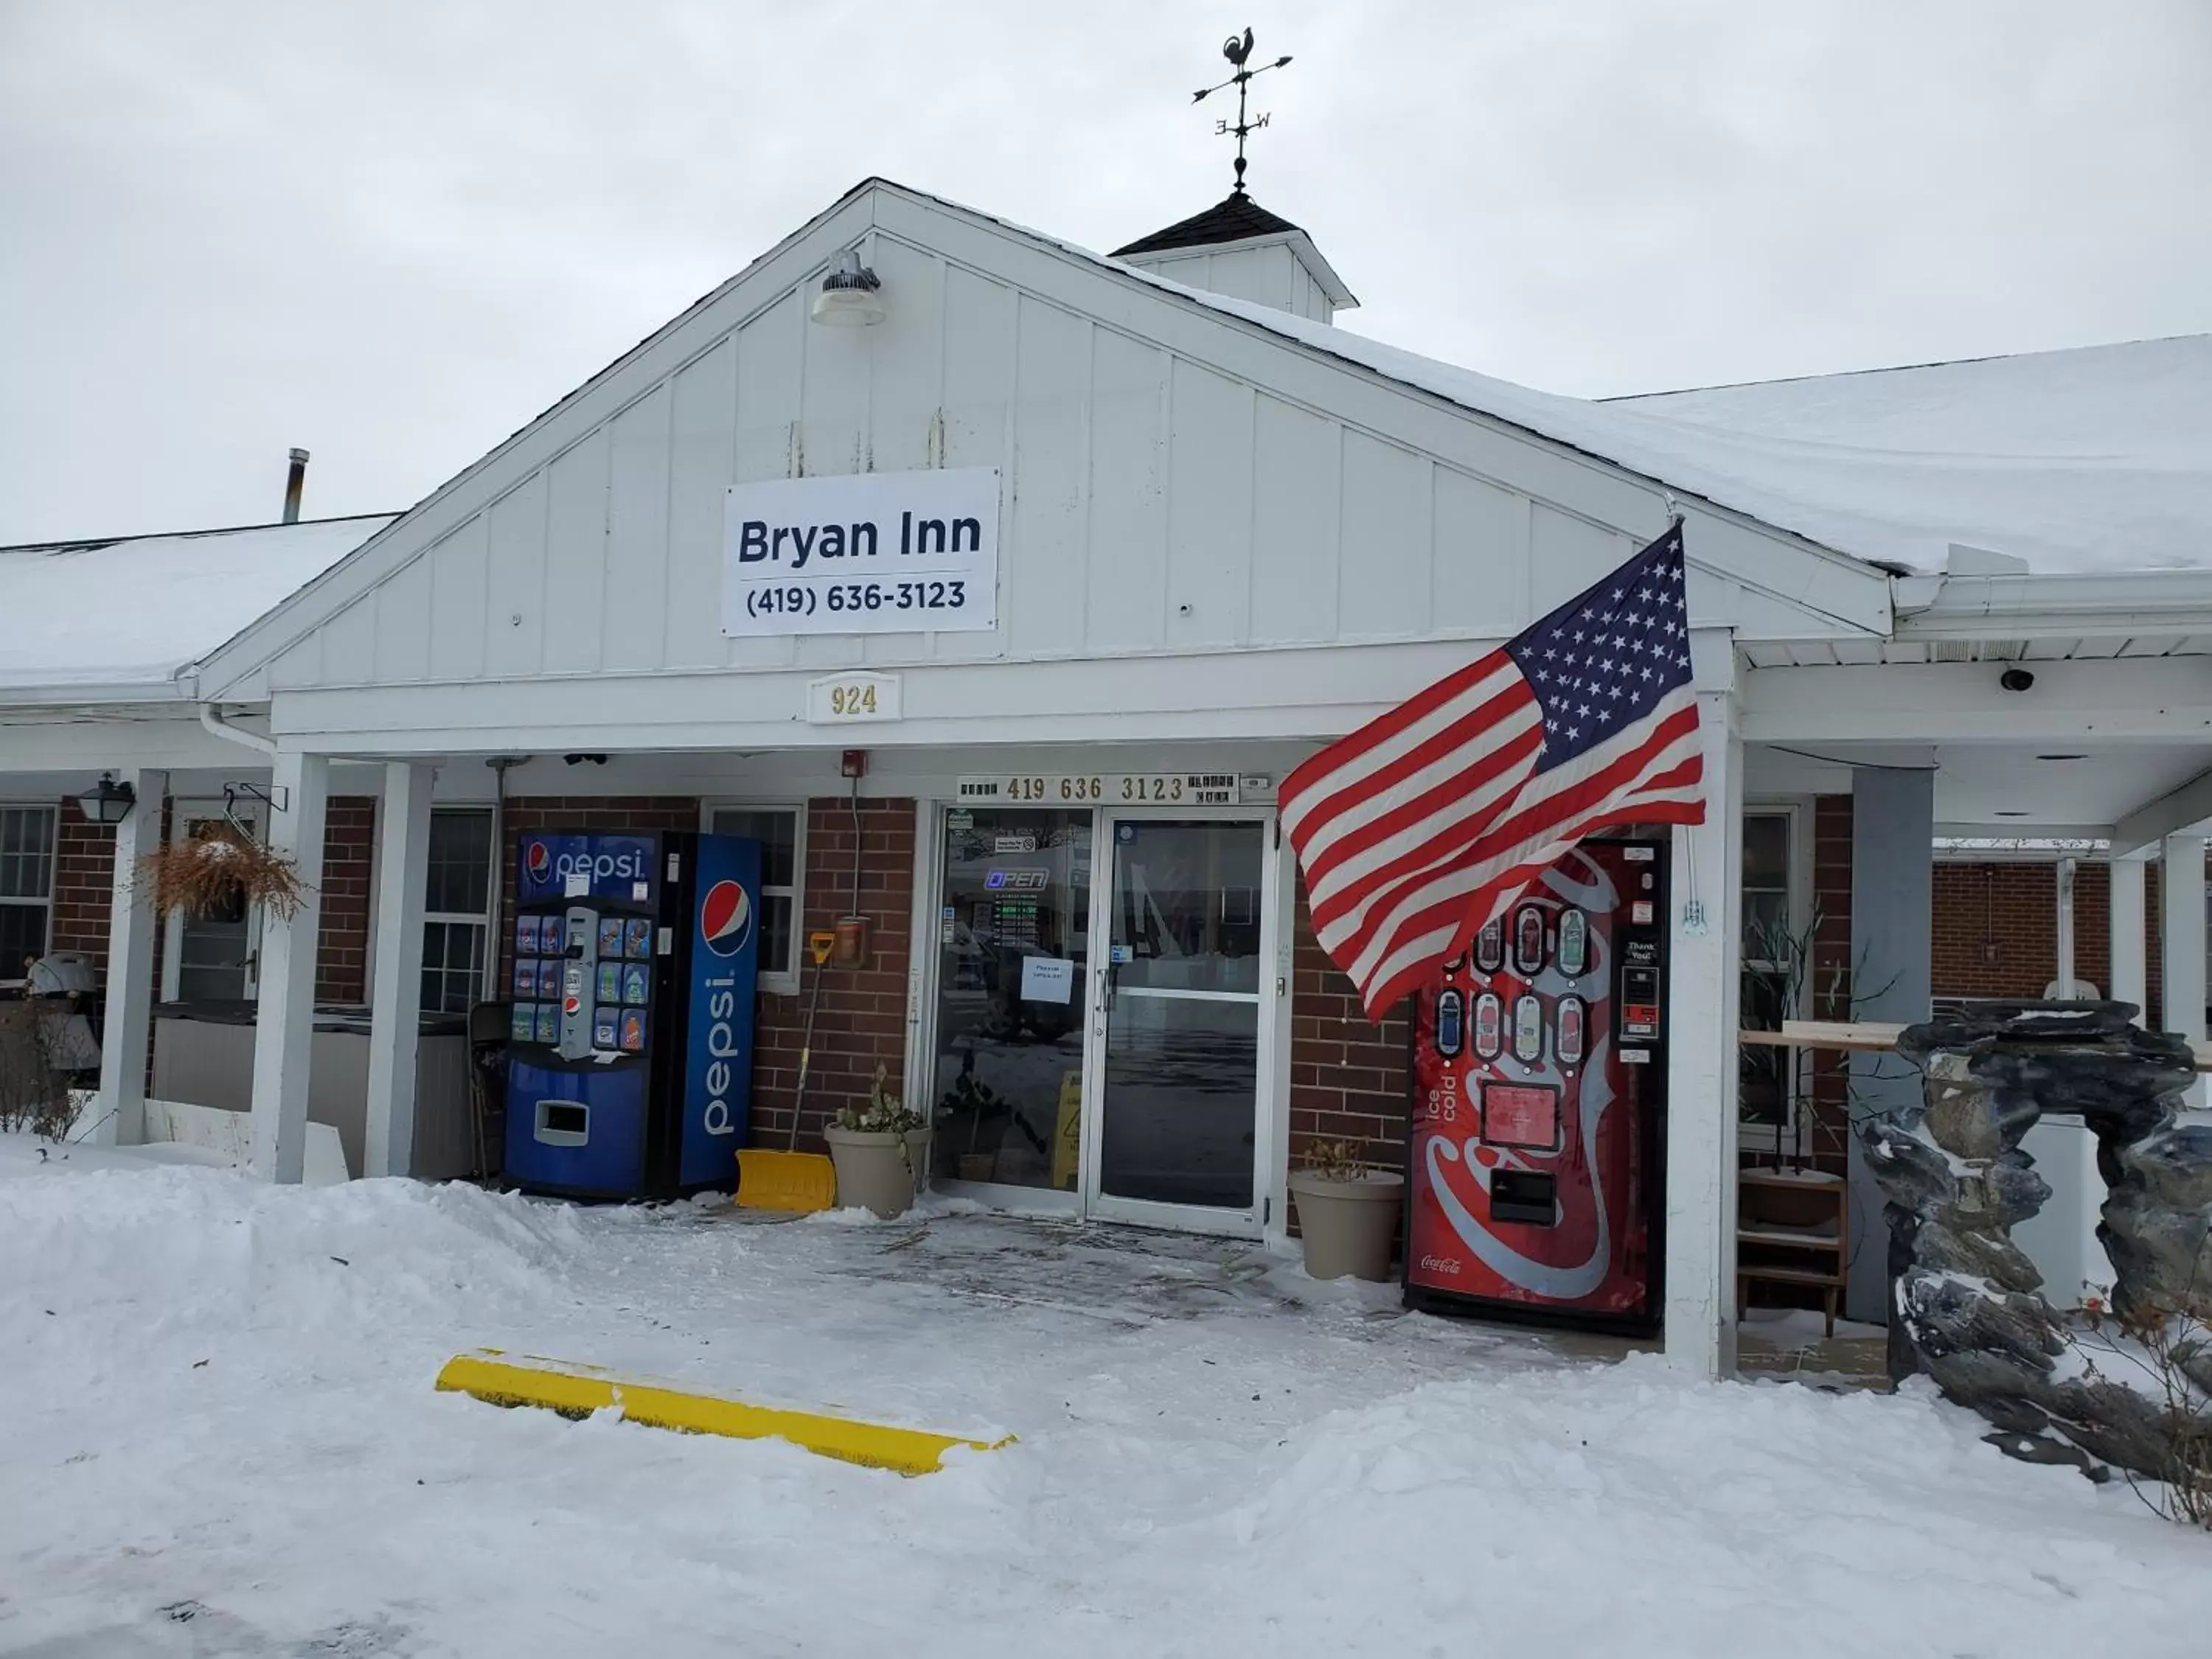 Winter in Bryan Inn